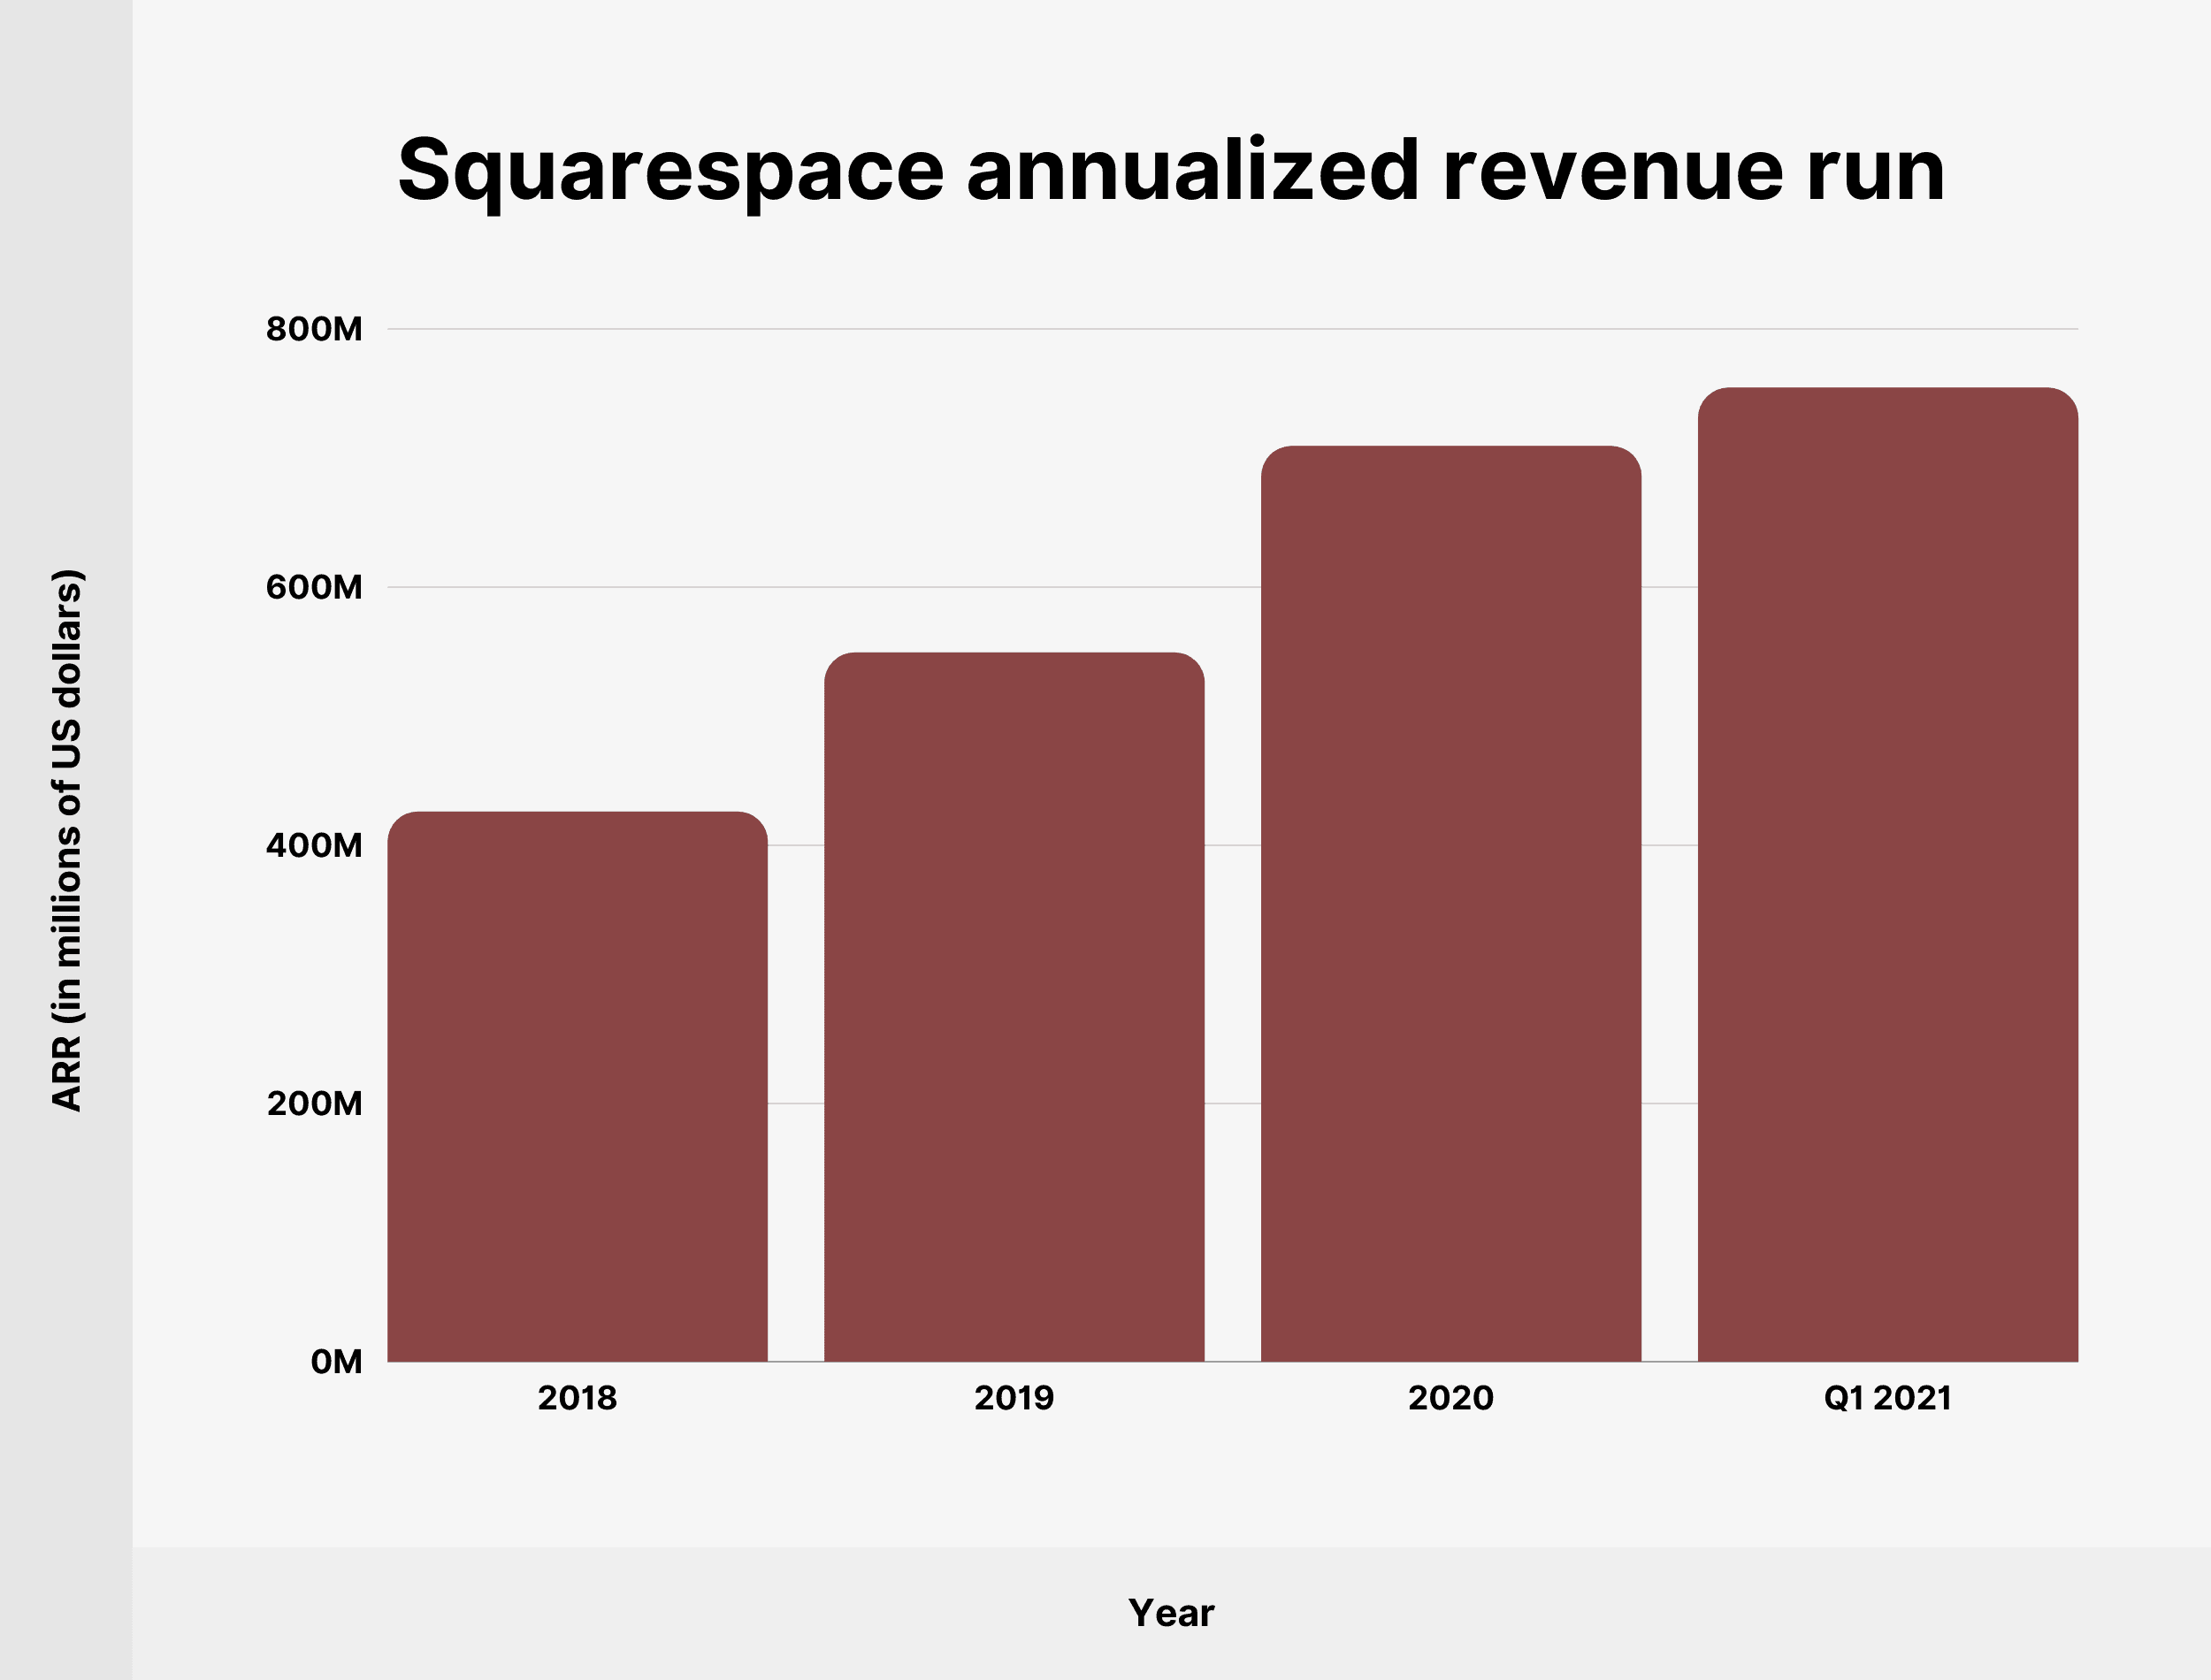 Squarespace annualized revenue run